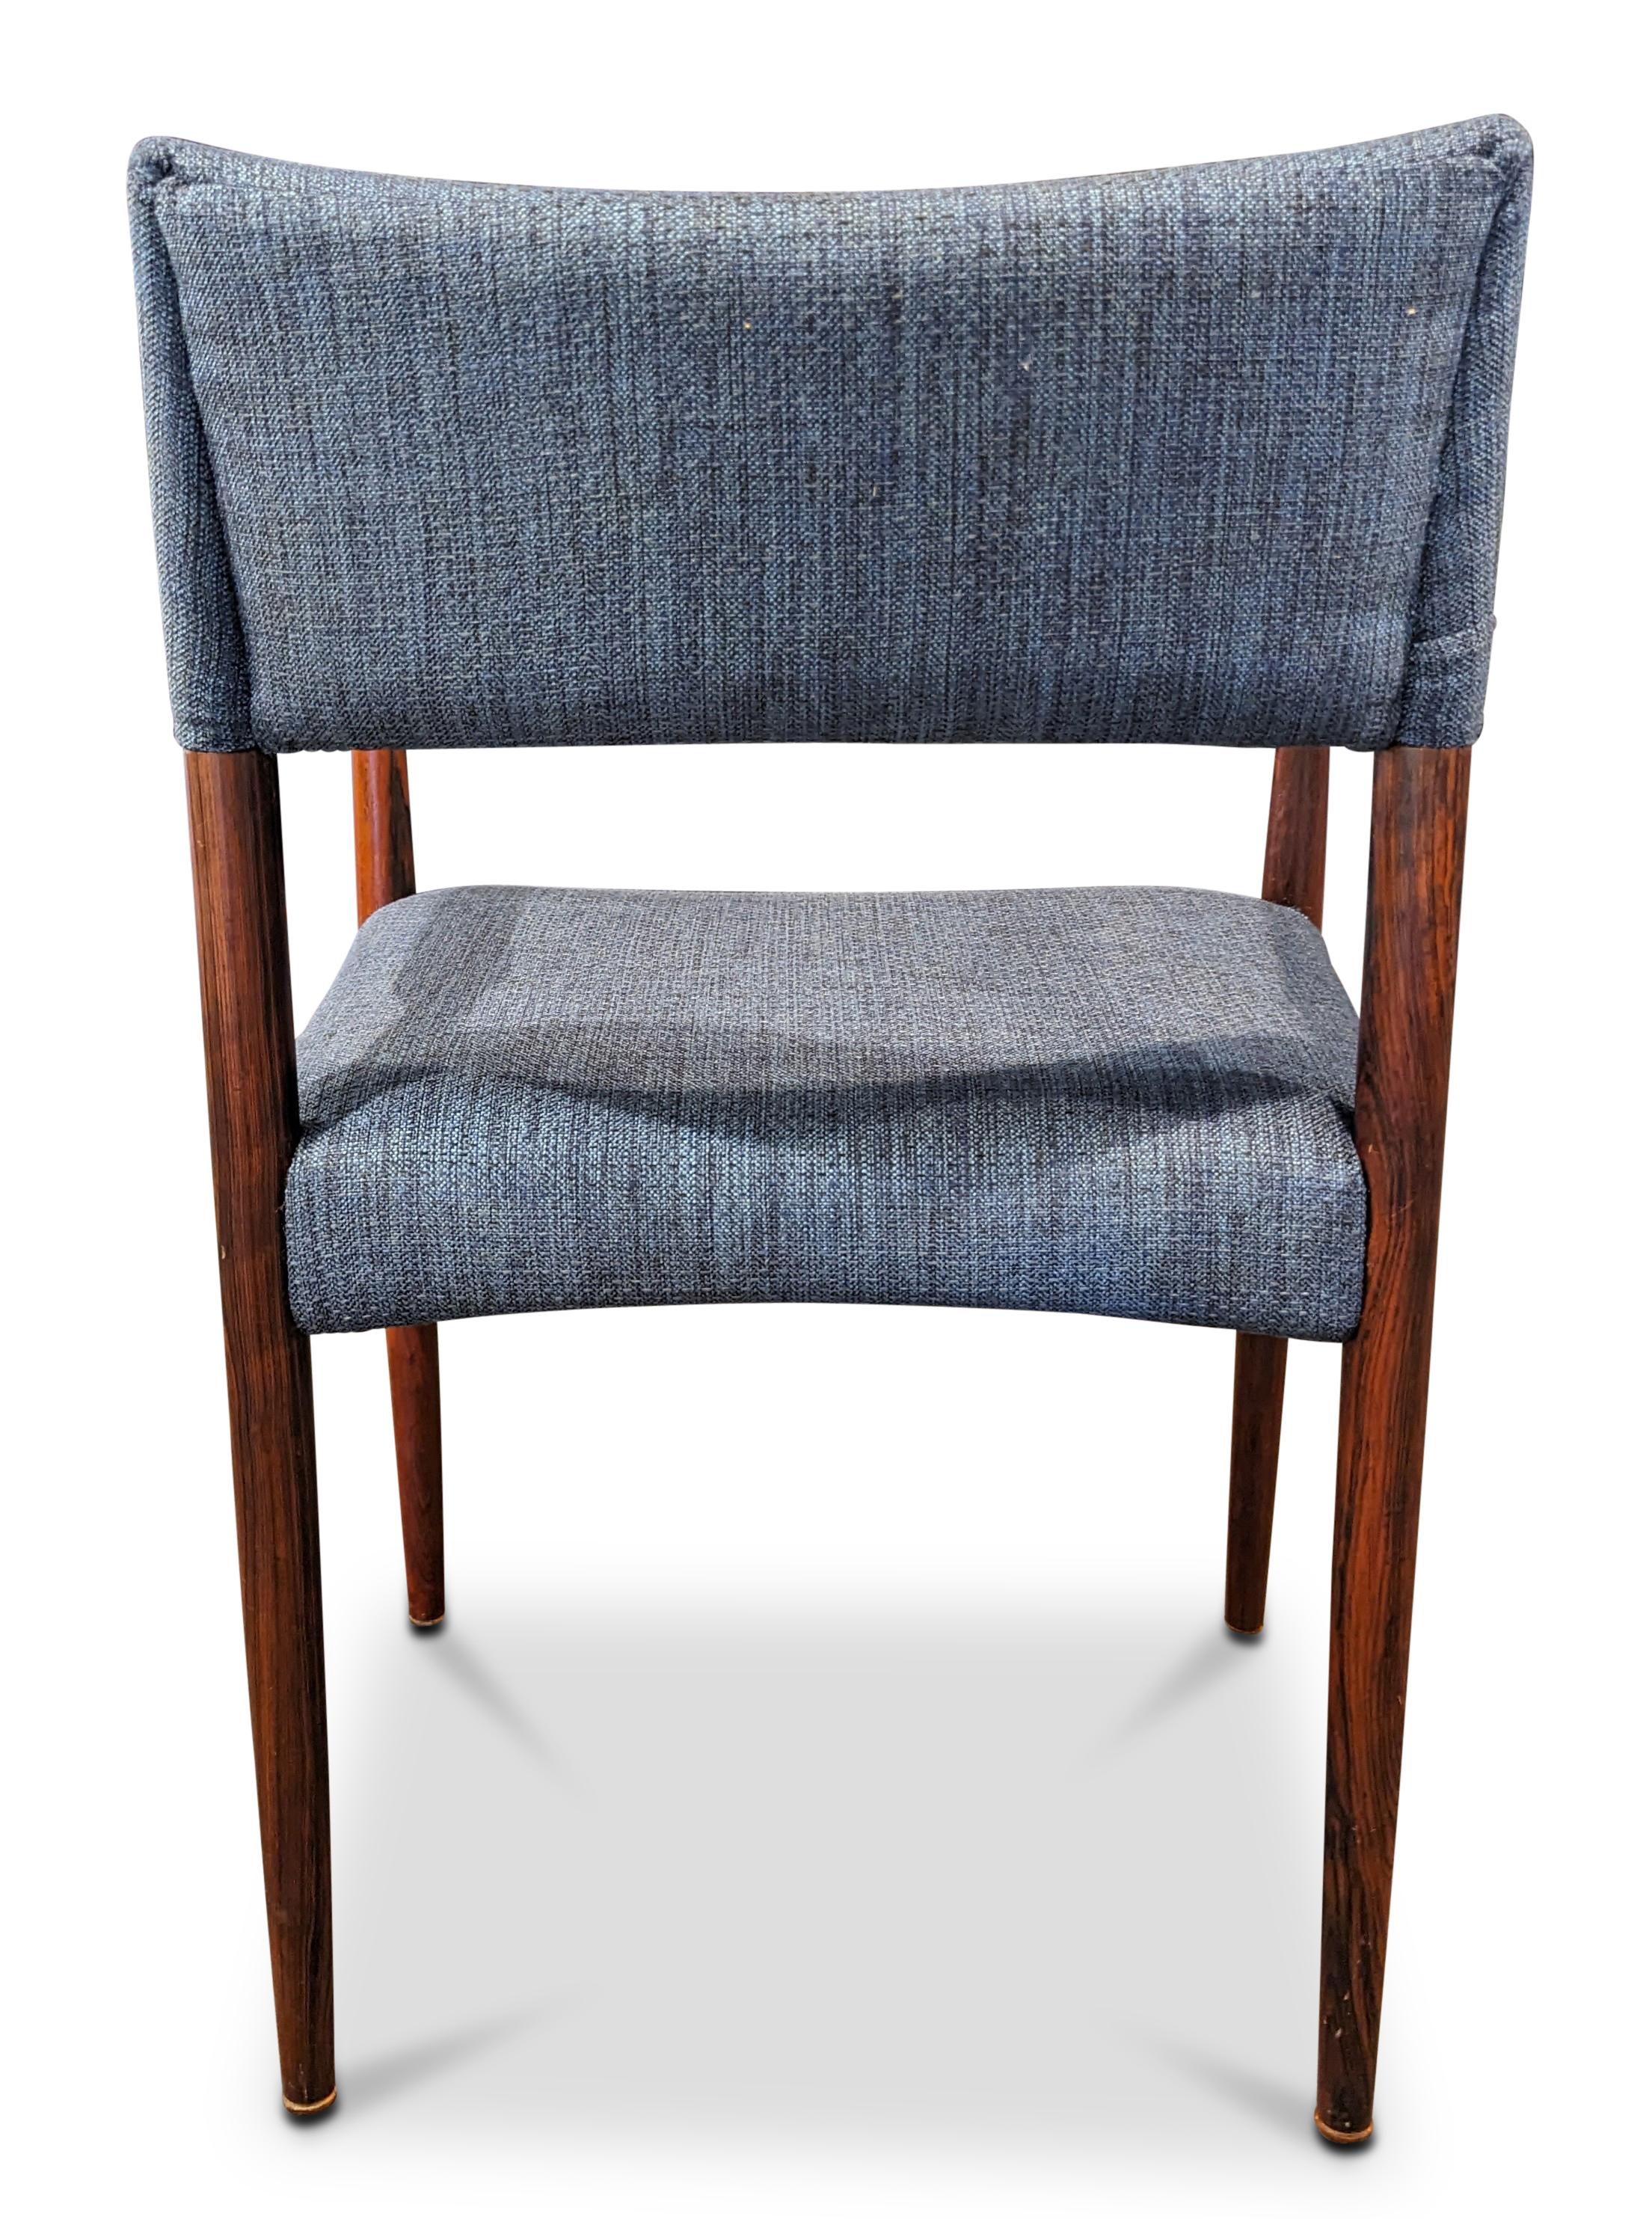 6 Aksel Bender Madsen Rosewood Dining Chairs - 072342 Vintage Danish Mid Century 3